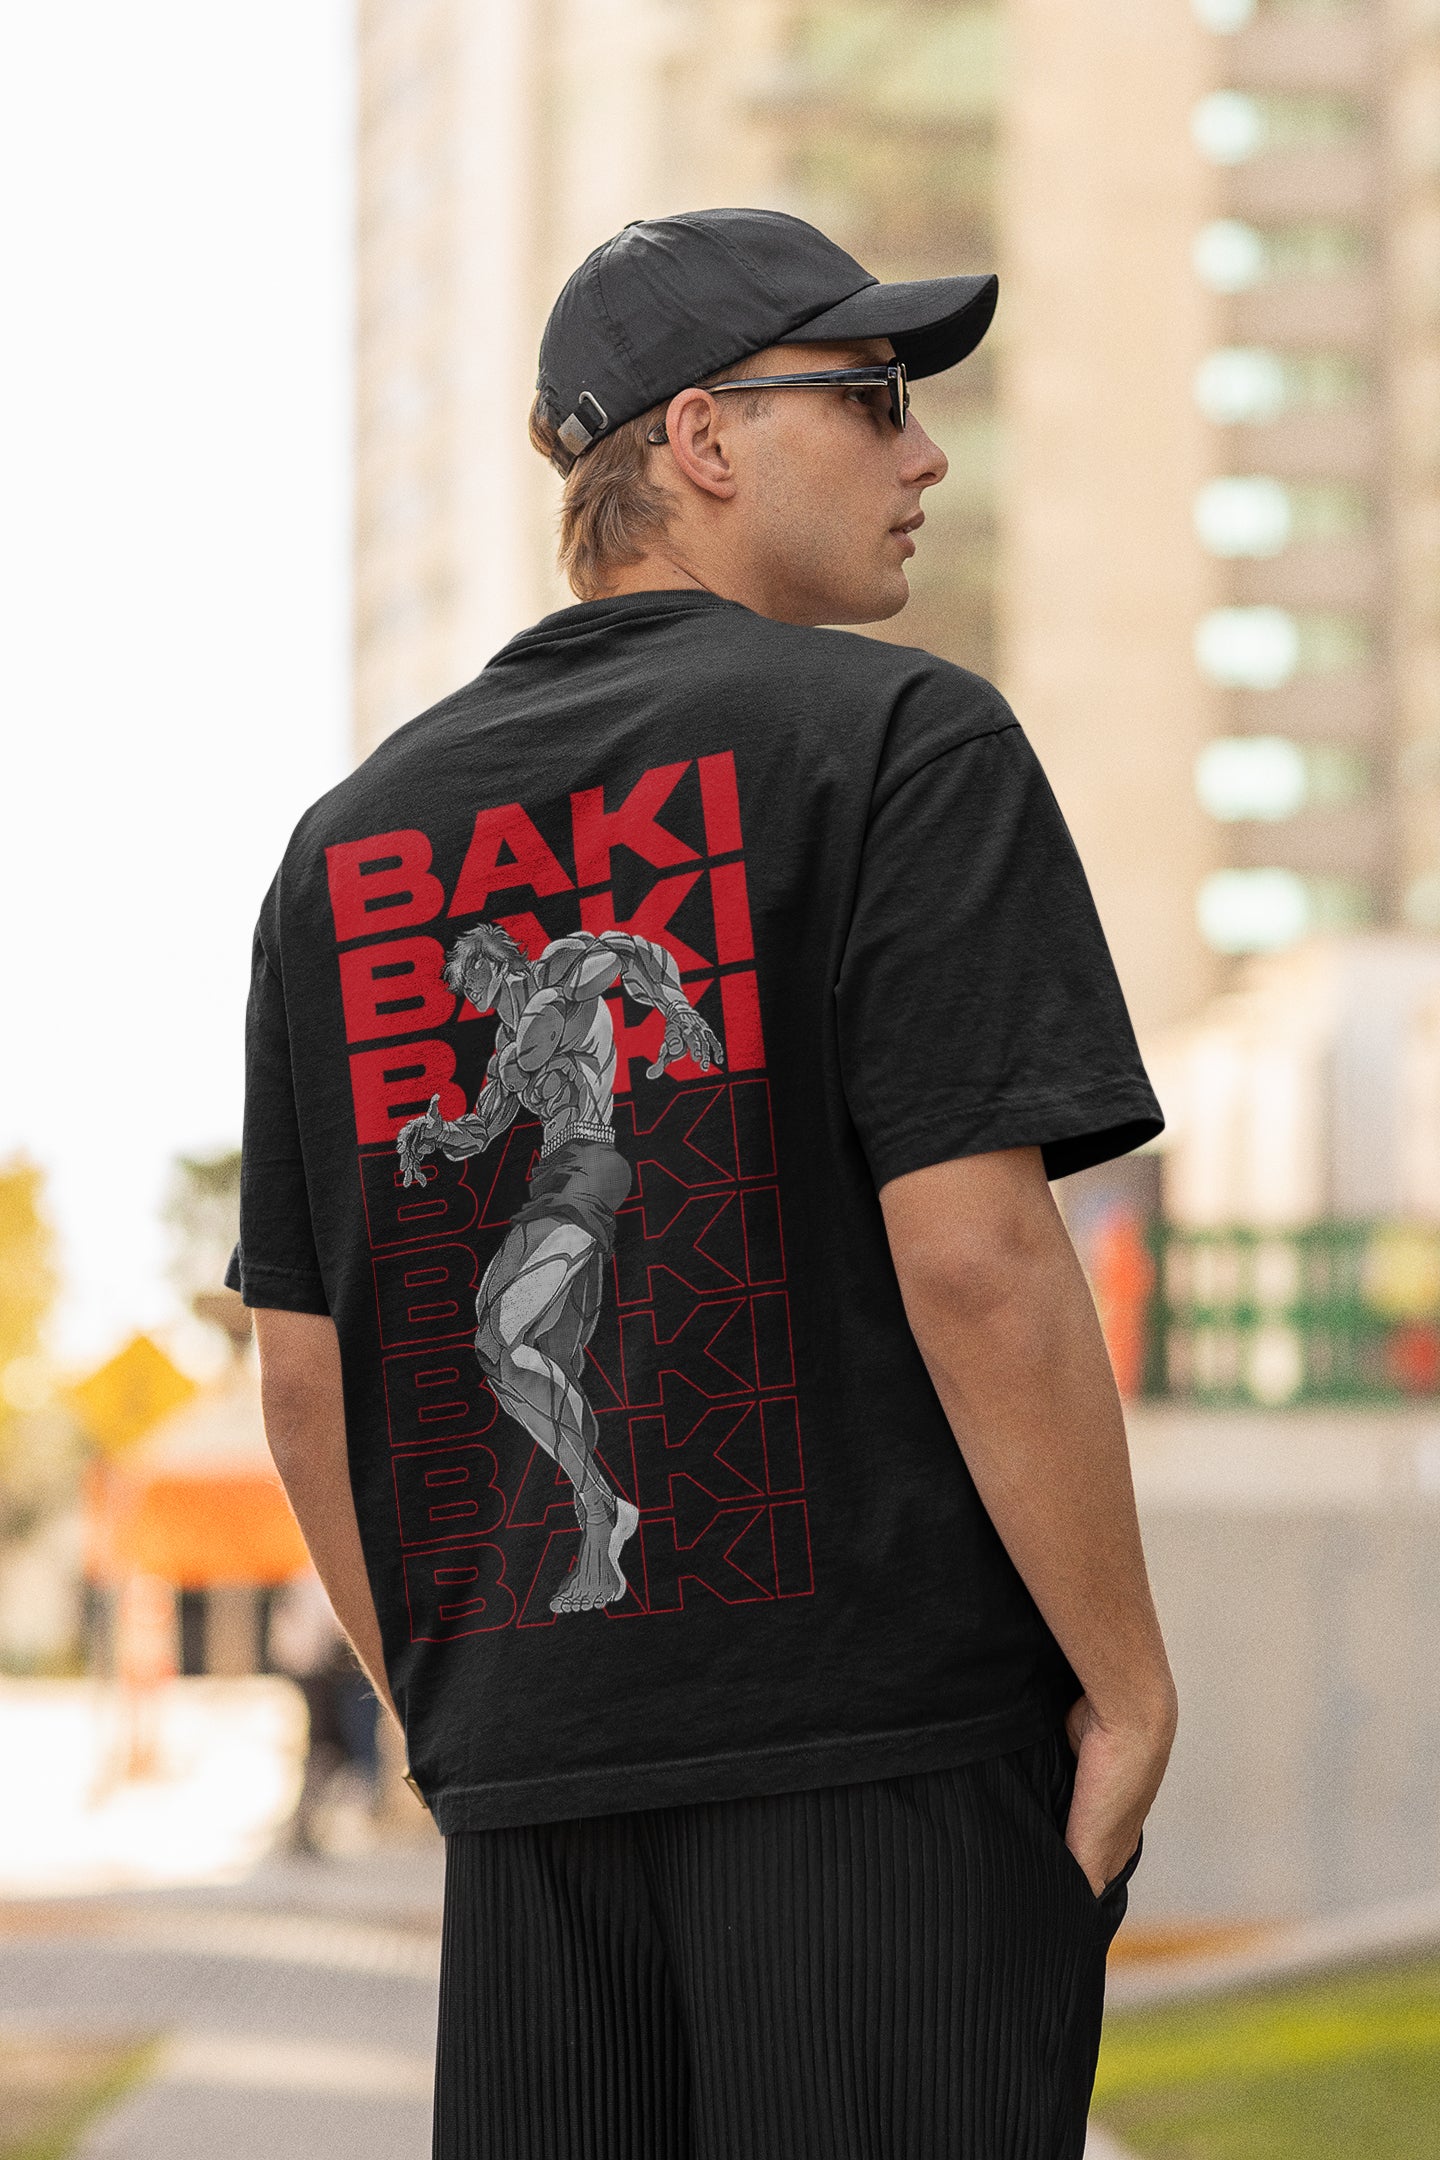 Baki men oversized graphic back printed anime t shirt